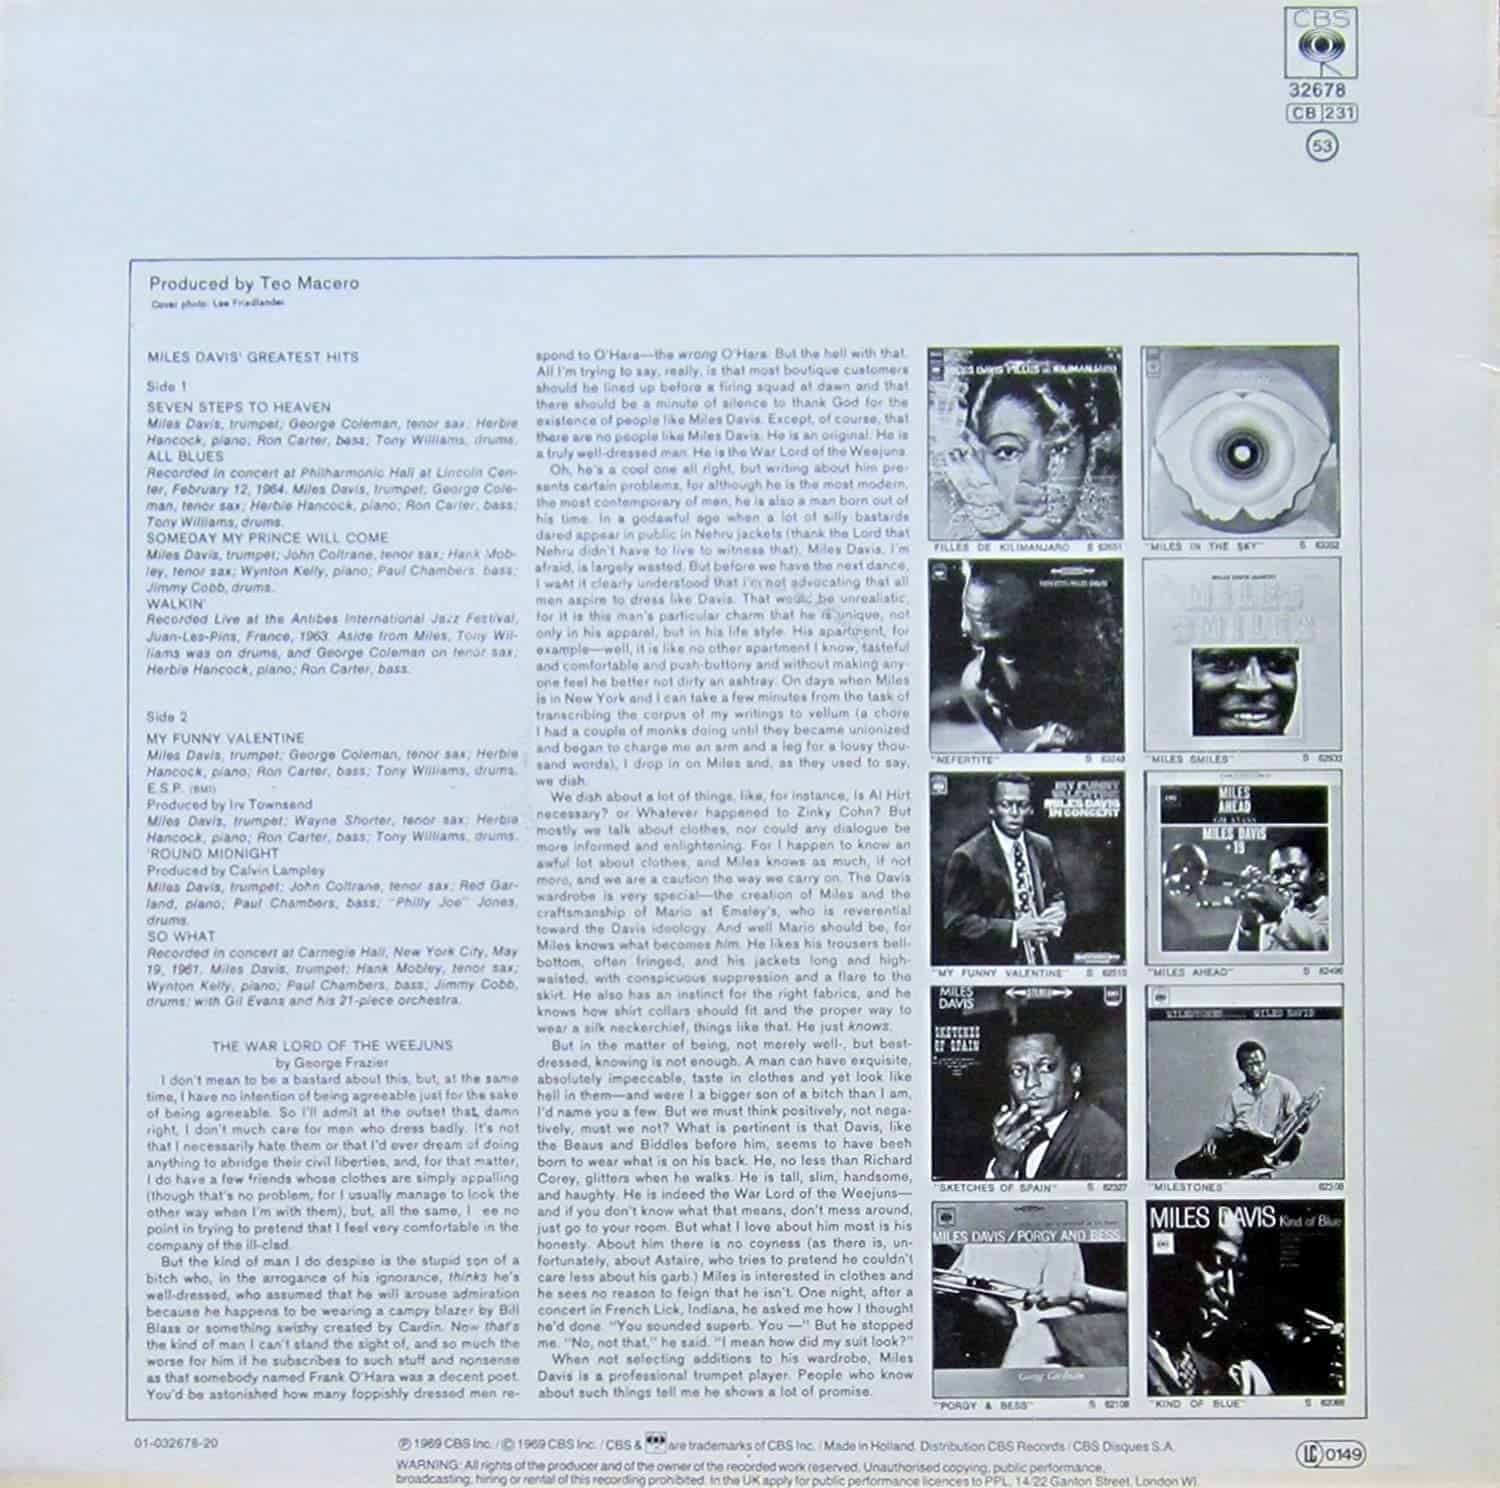 Miles-Davis-Greatest-Hits-vinyl-record-album-back